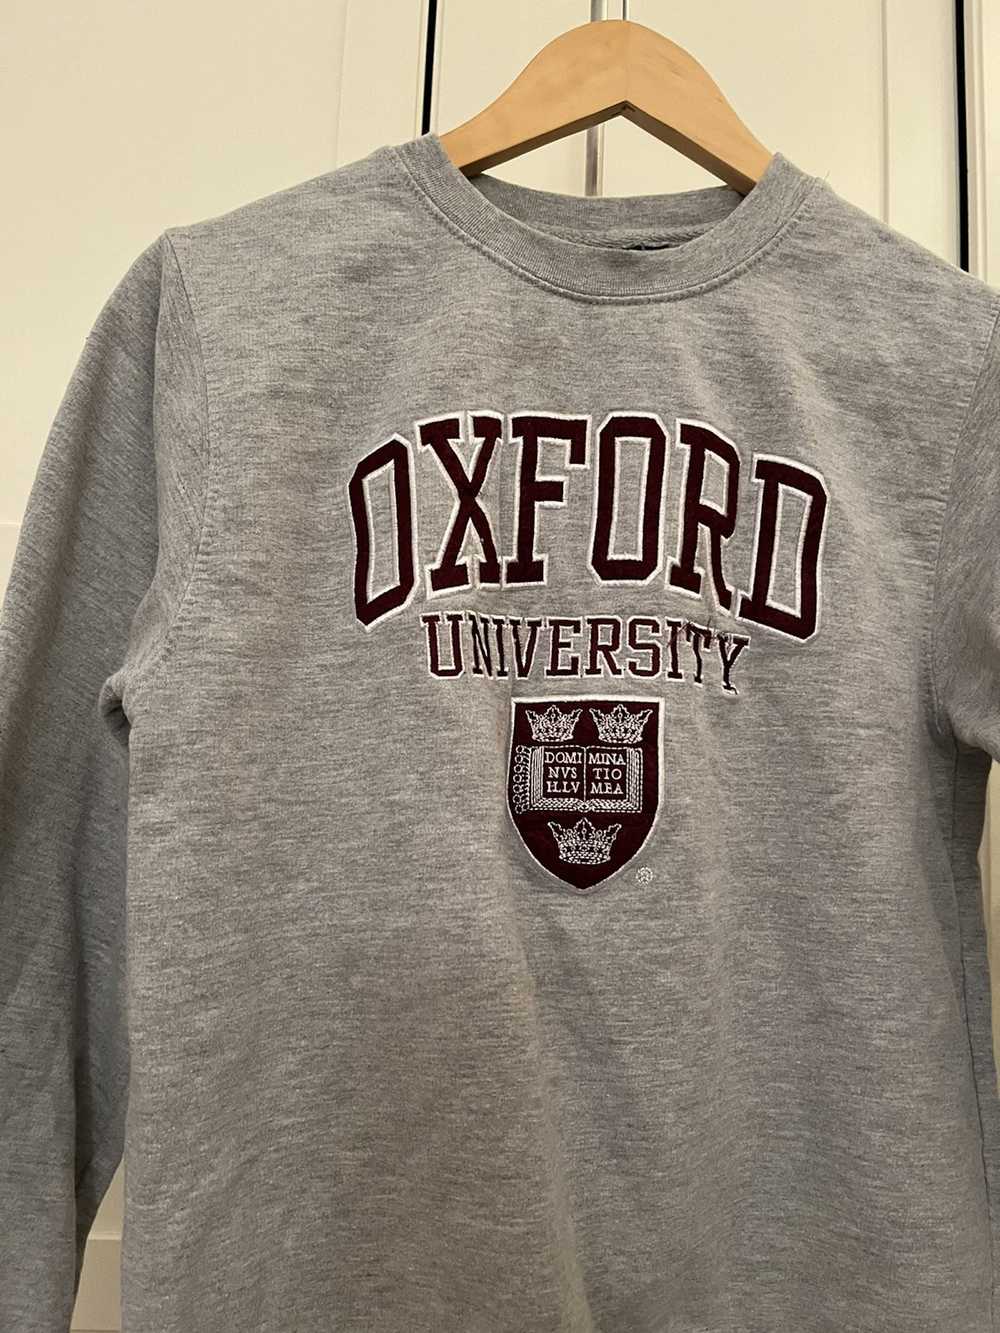 Oxford Oxford University Crewneck - image 3